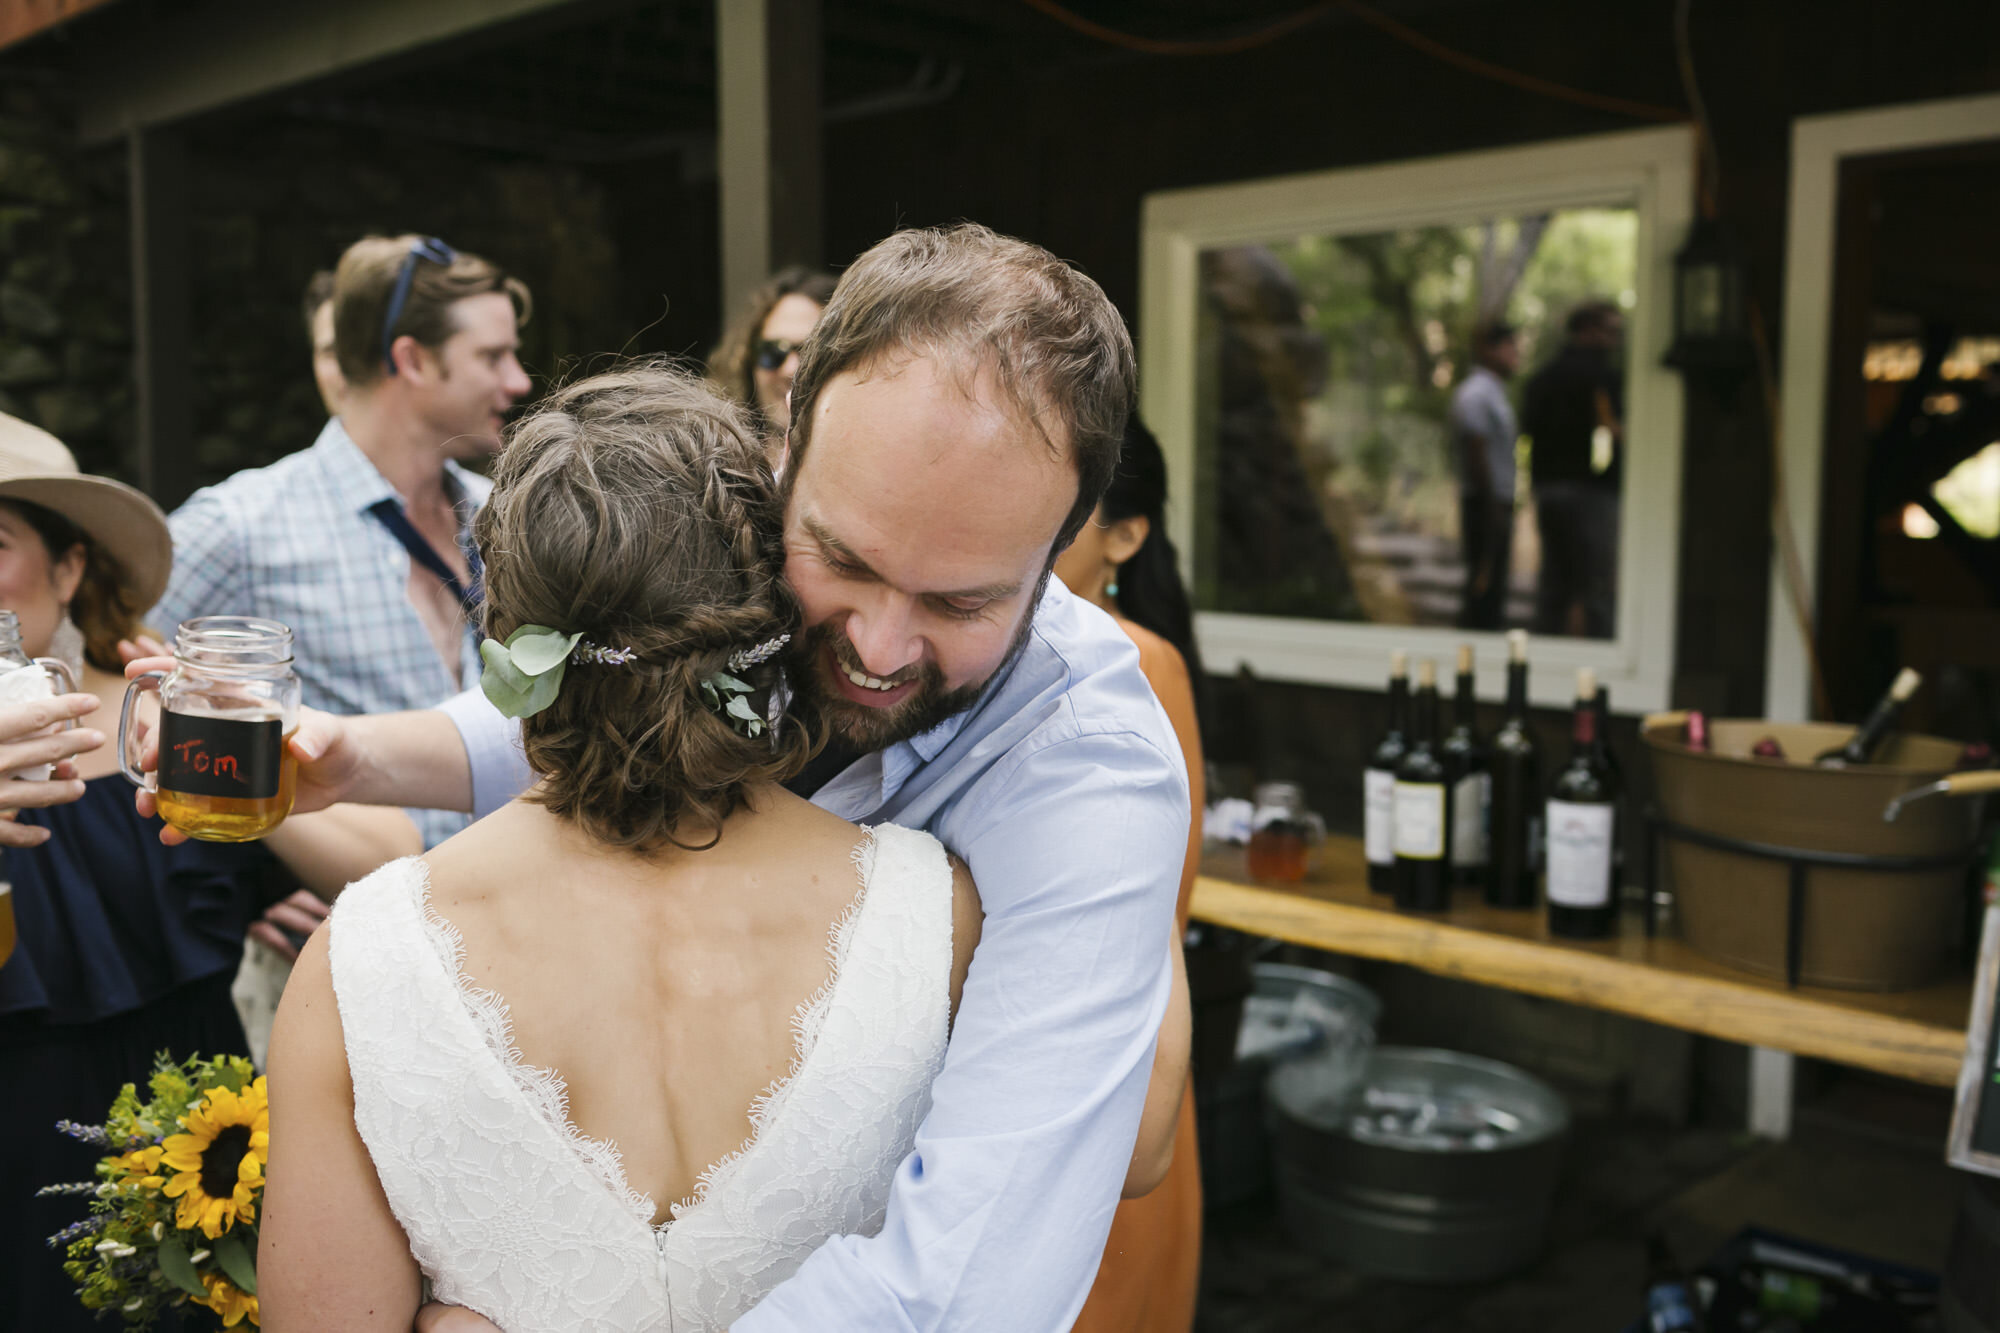 Bridge hugs friend at backyard wedding reception in Sonoma California